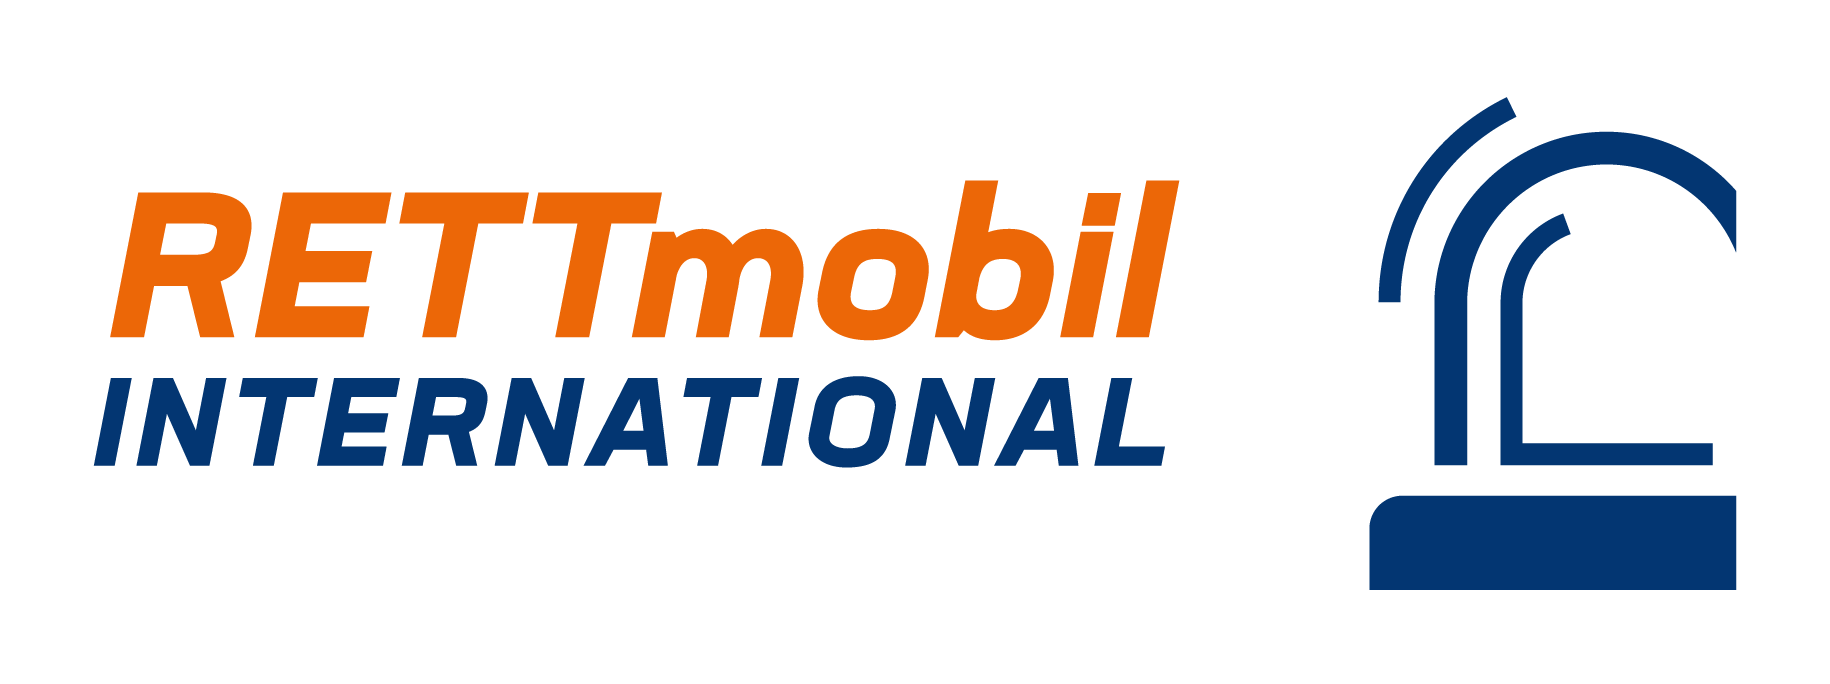 https://www.rettmobil-international.com/wp-content/uploads/2020/06/mri_logo_orange_blau.png